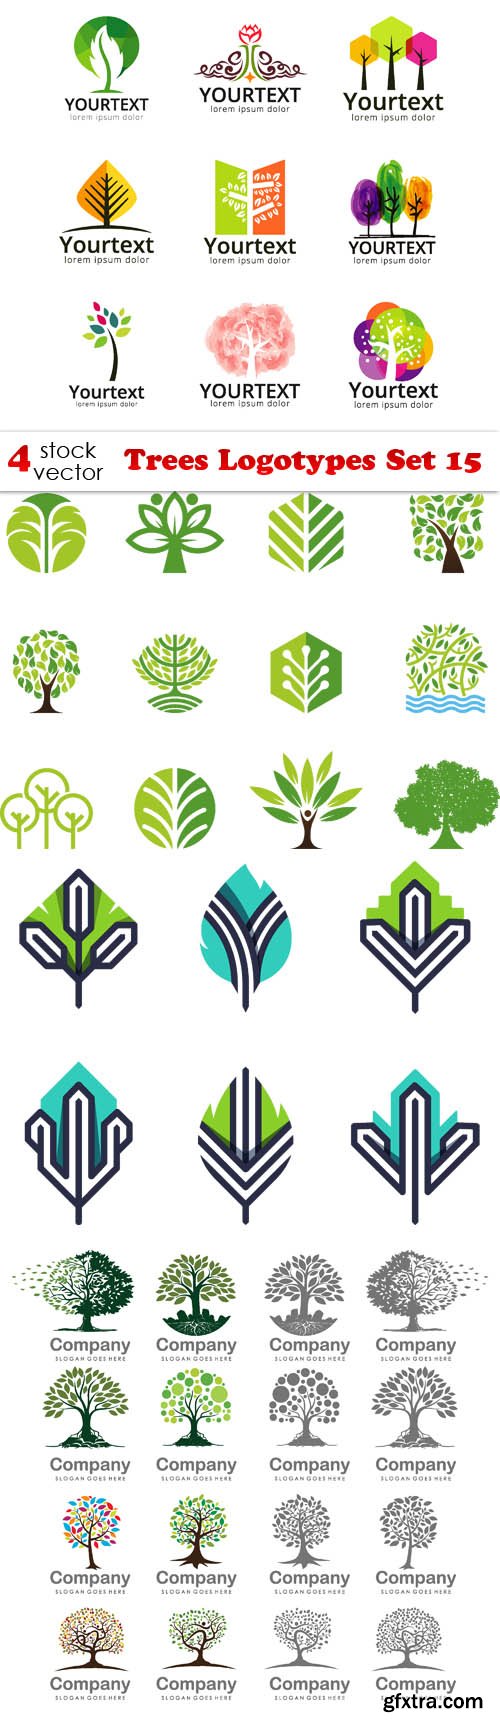 Vectors - Trees Logotypes Set 15